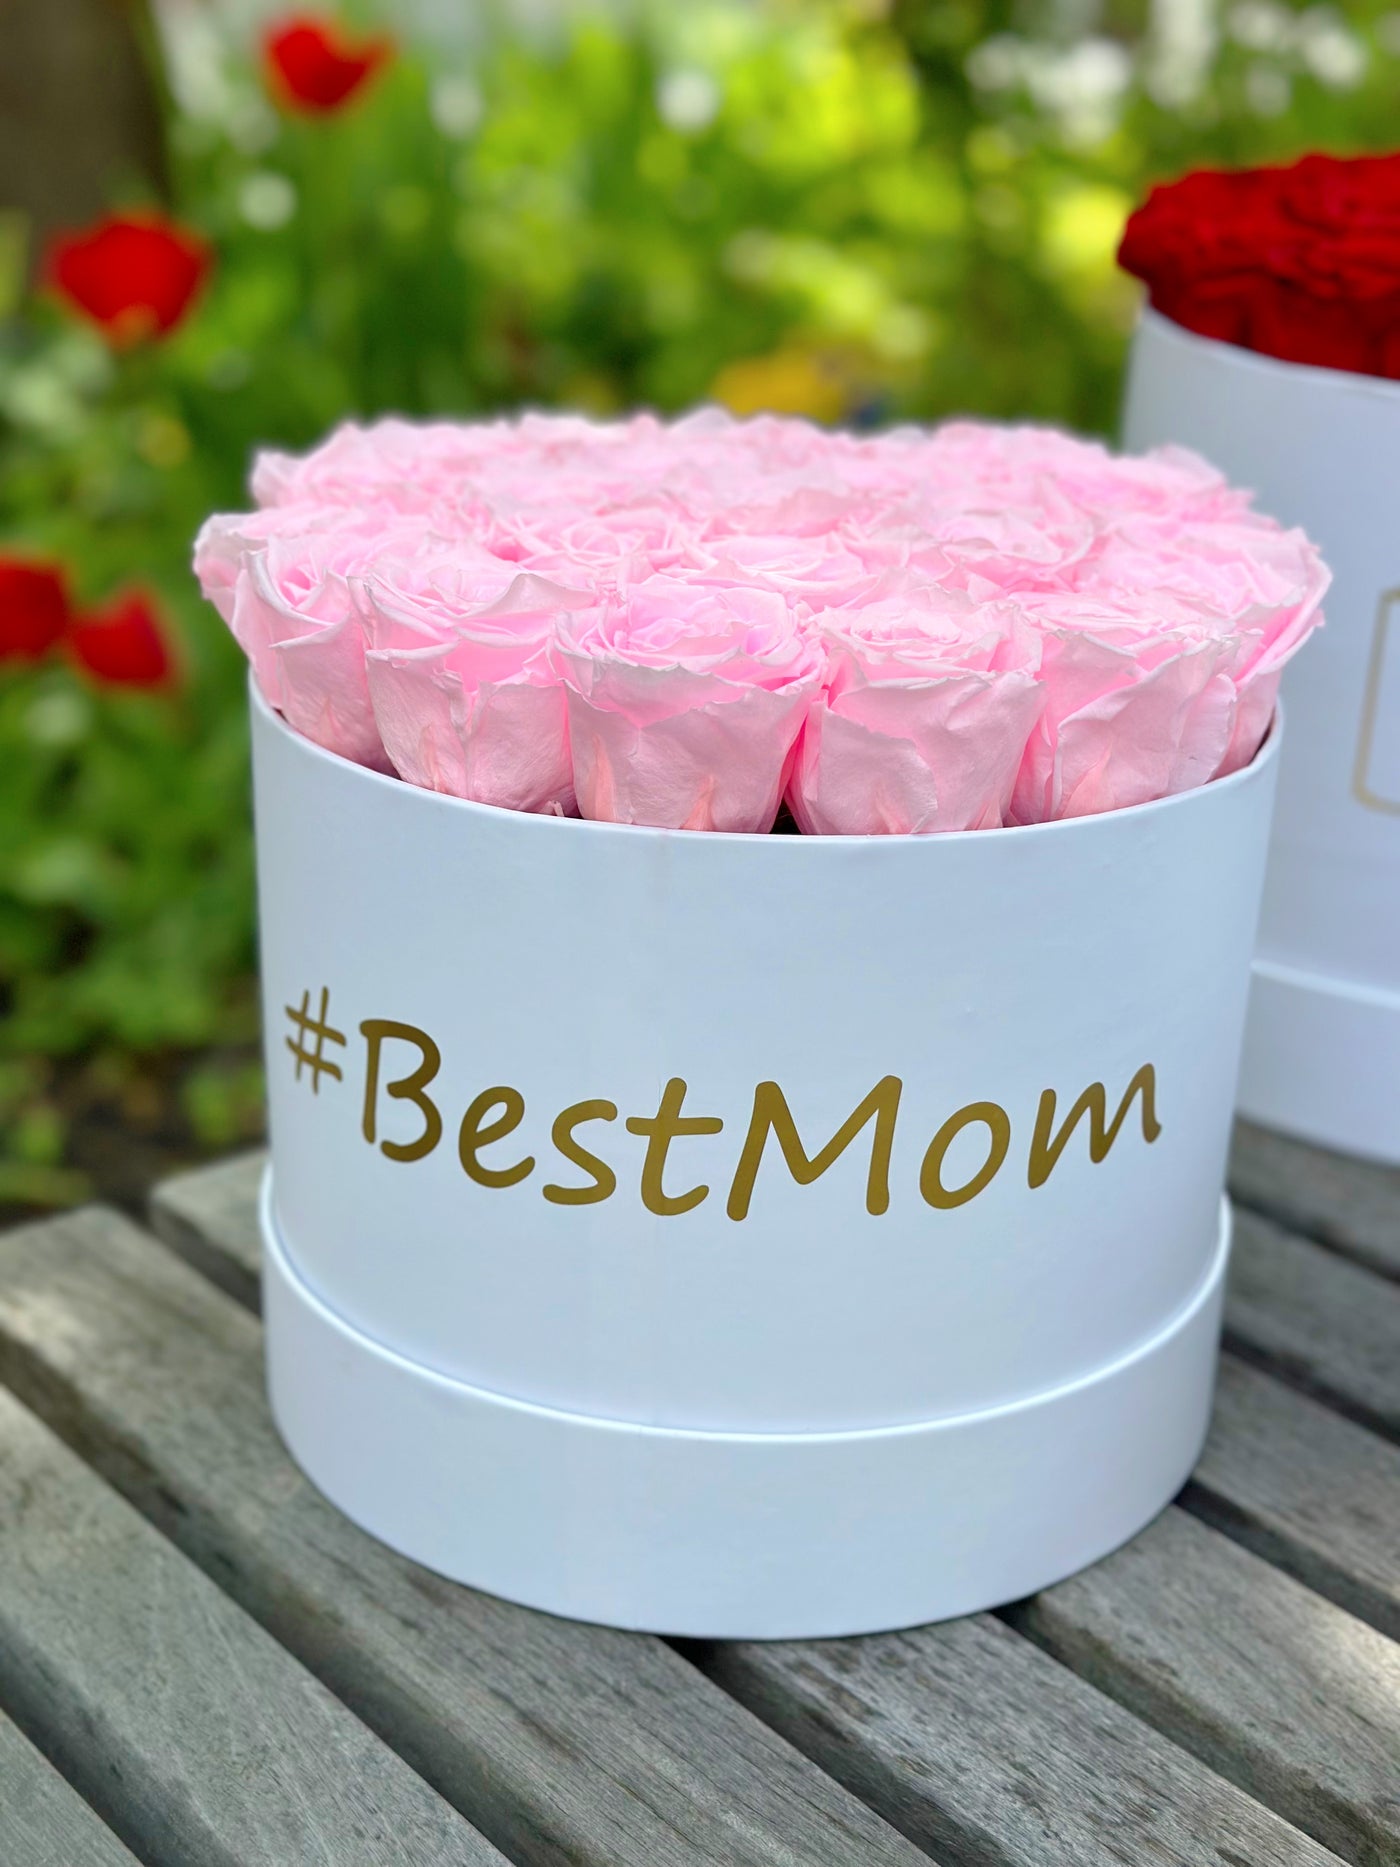 #BestMom Medium White Box with Light Pink Roses